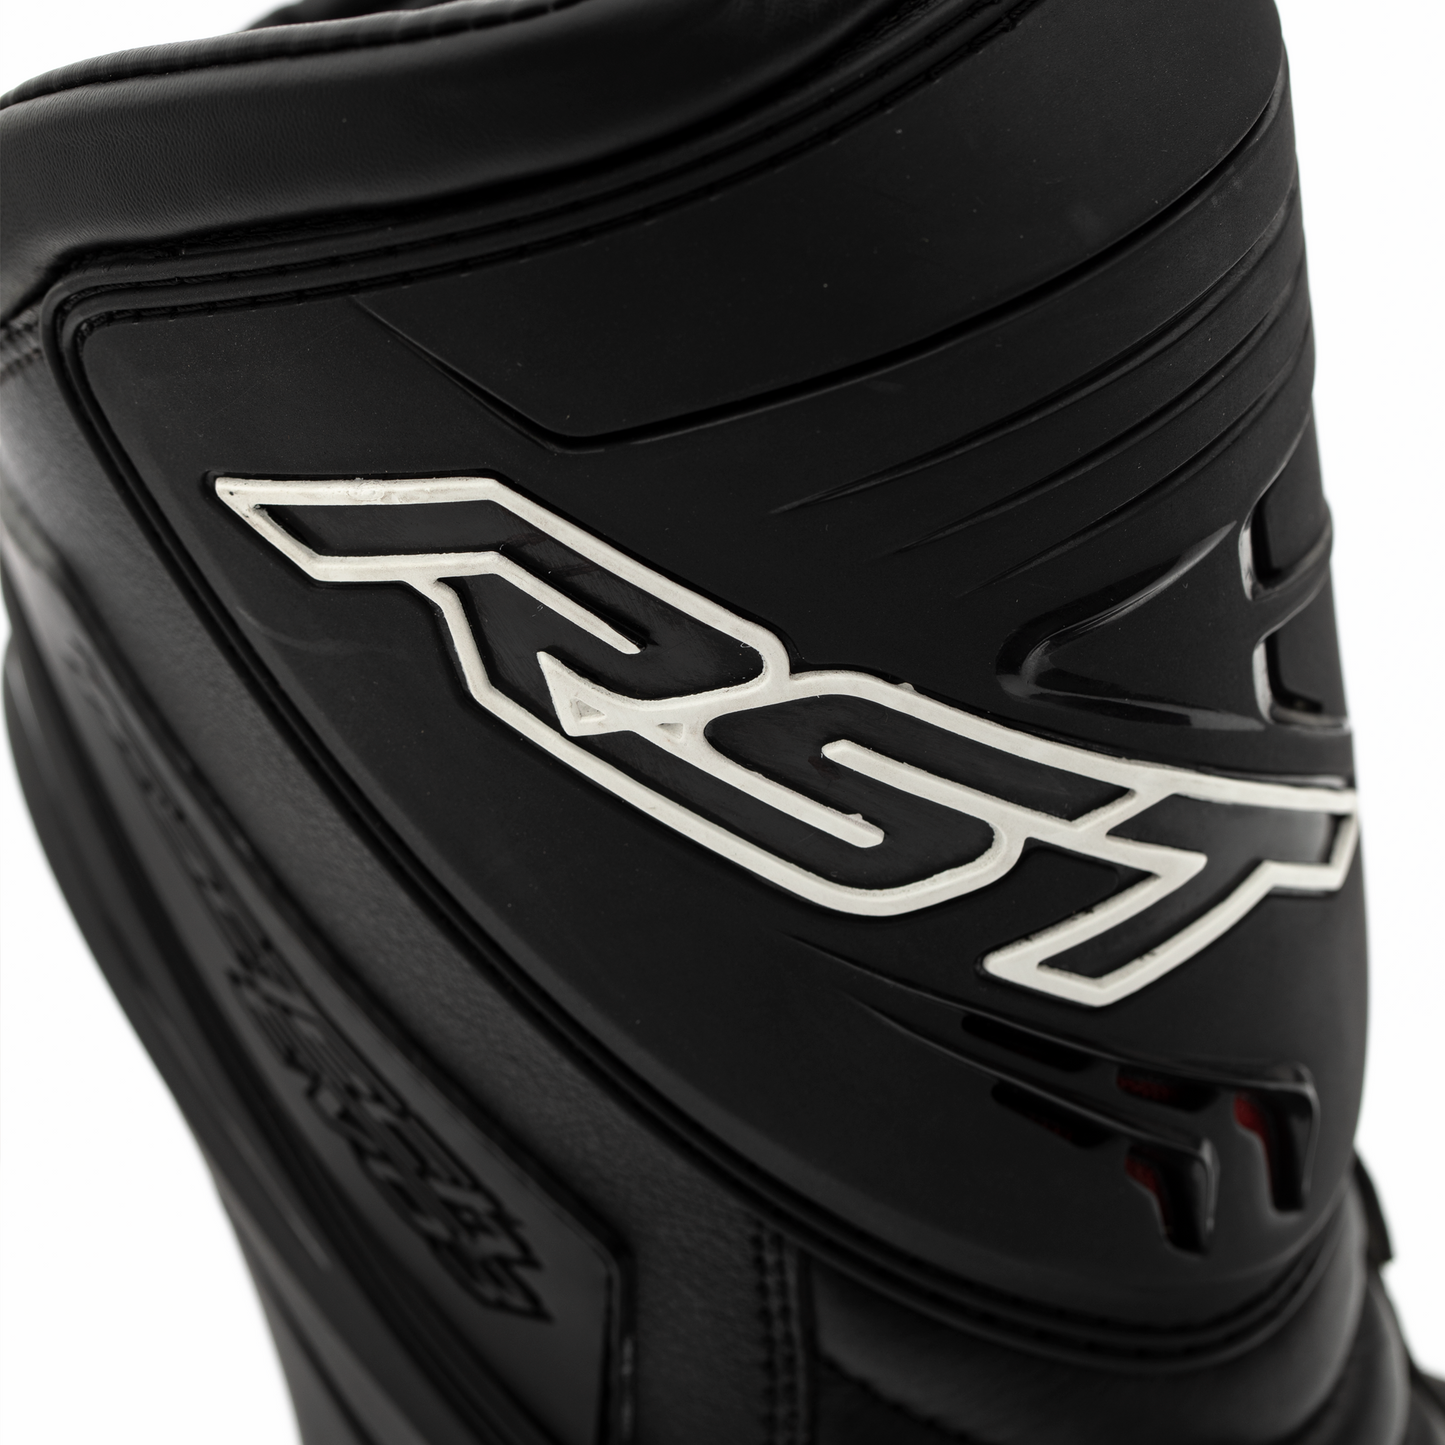 RST Tractech Evo III 3 Waterproof CE Boots - Black